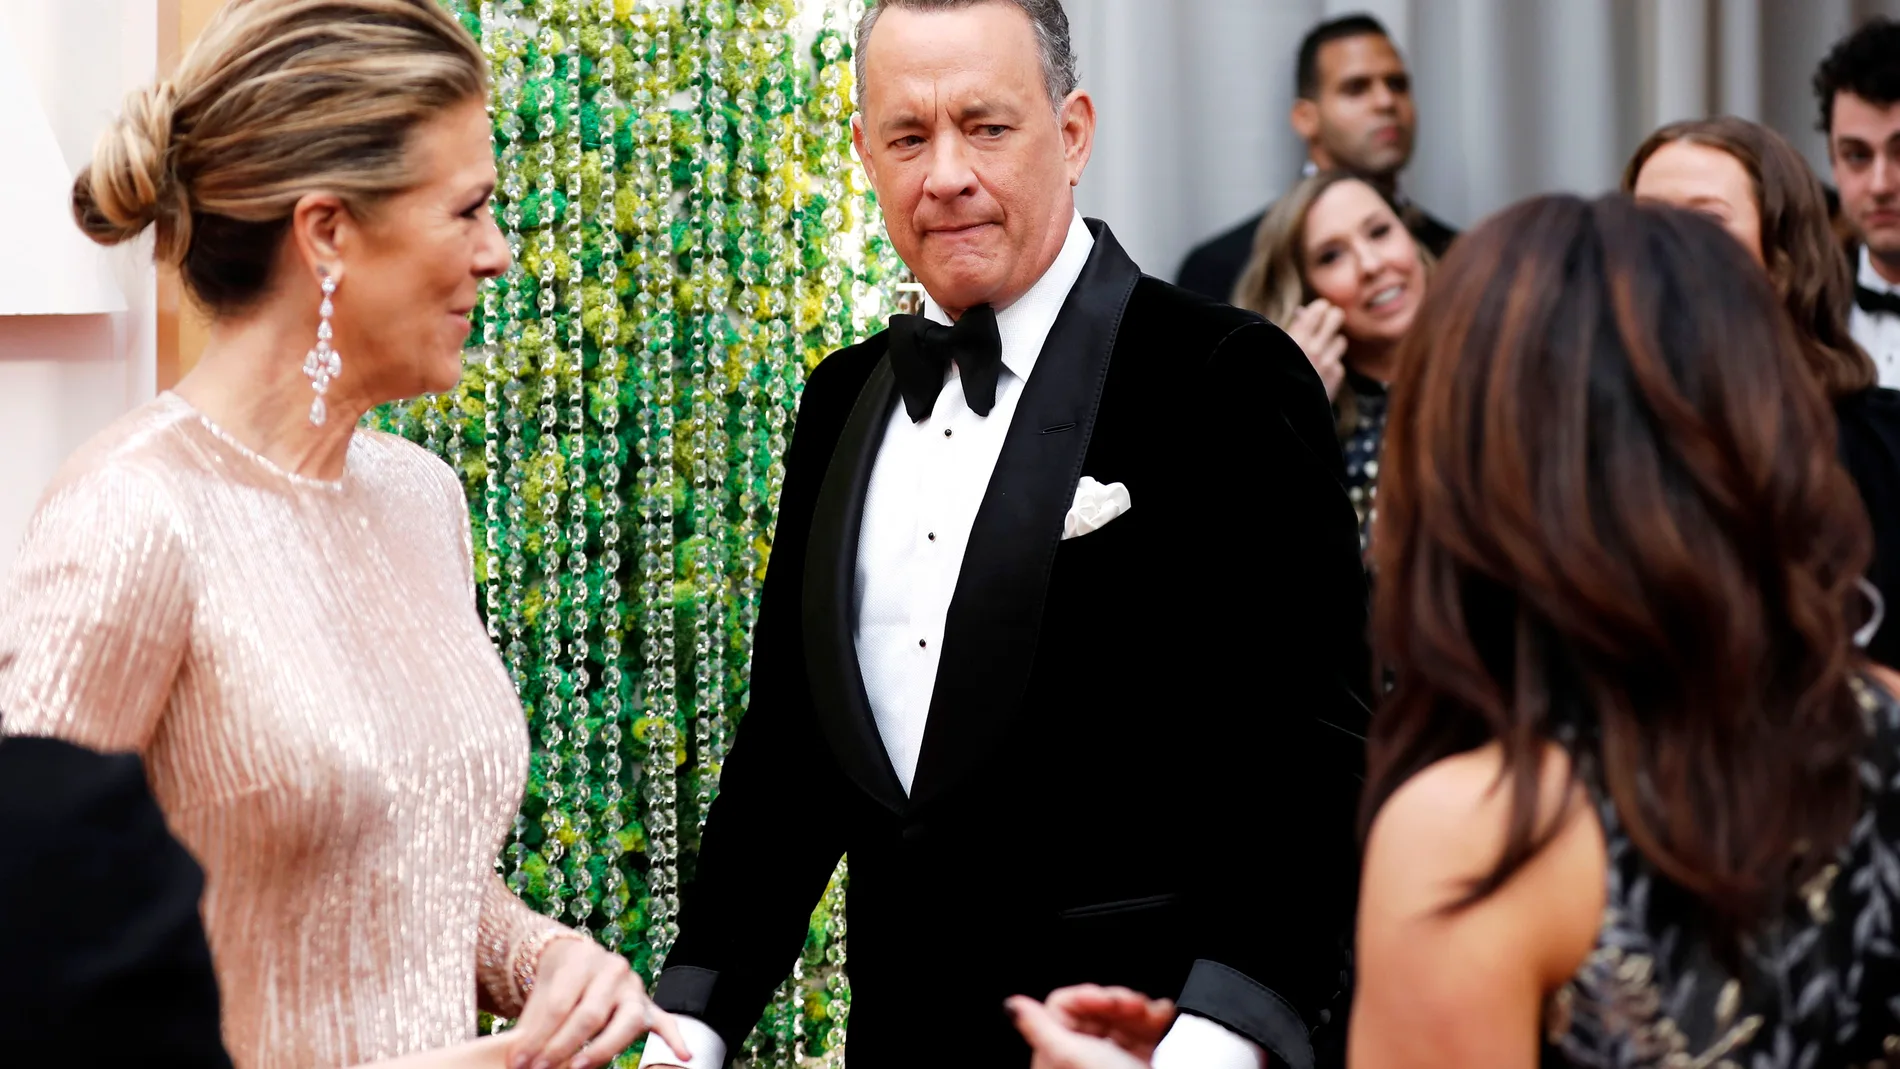 Tom Hanks and wife Rita wilson tested positive for coronavirus